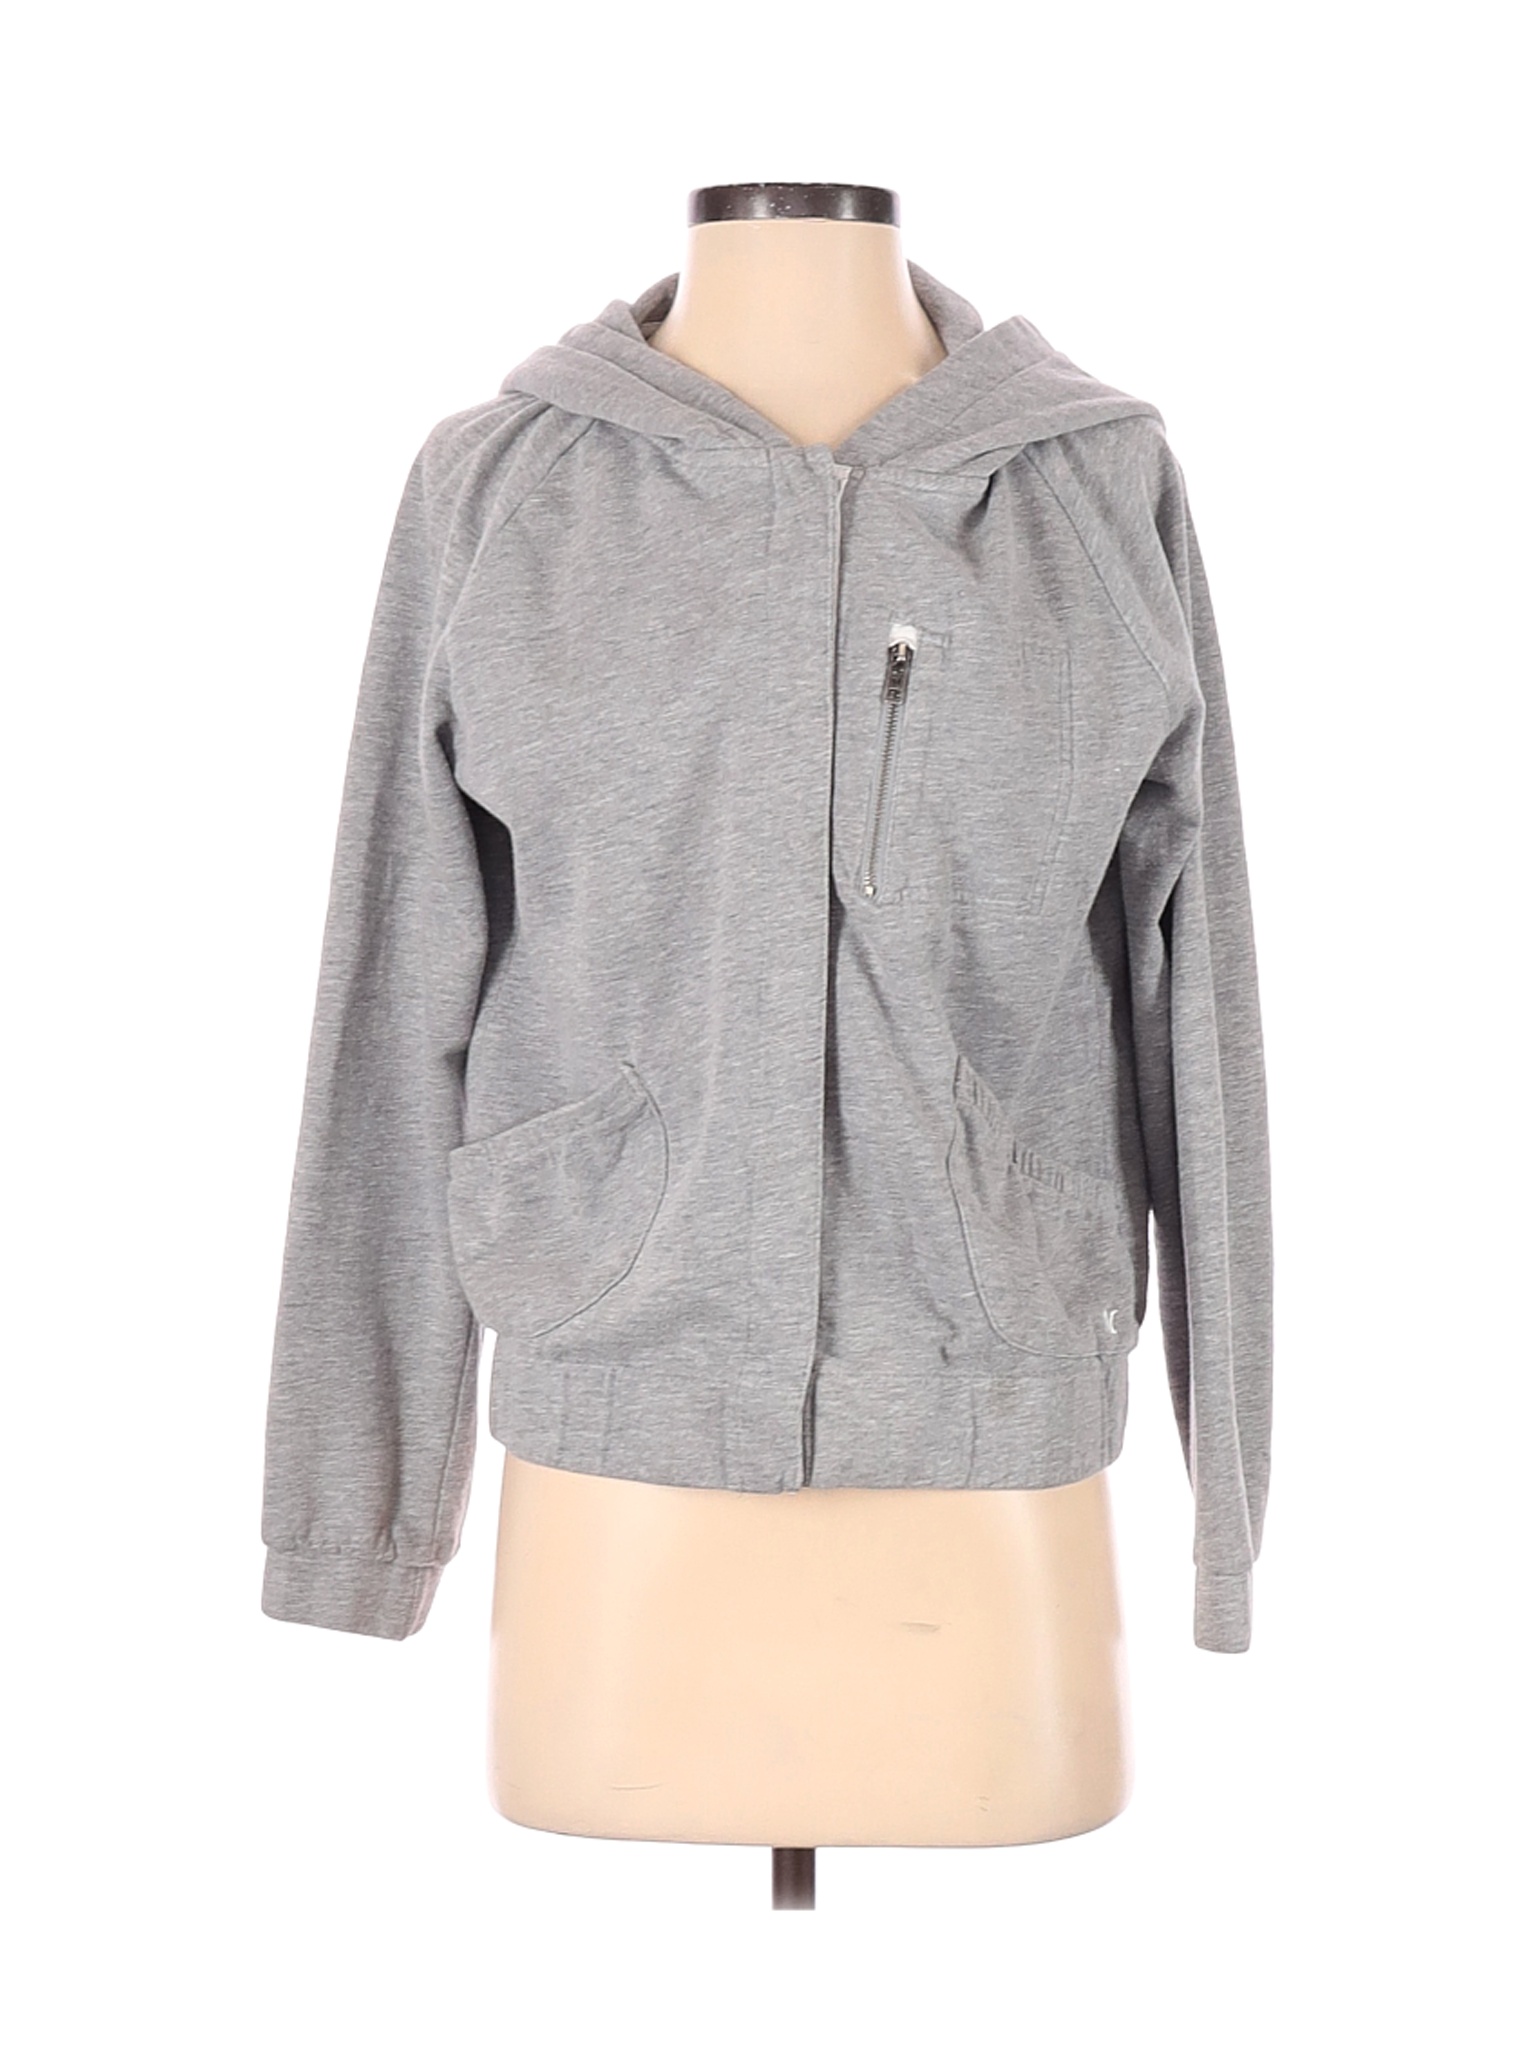 Hurley Women Gray Jacket S | eBay